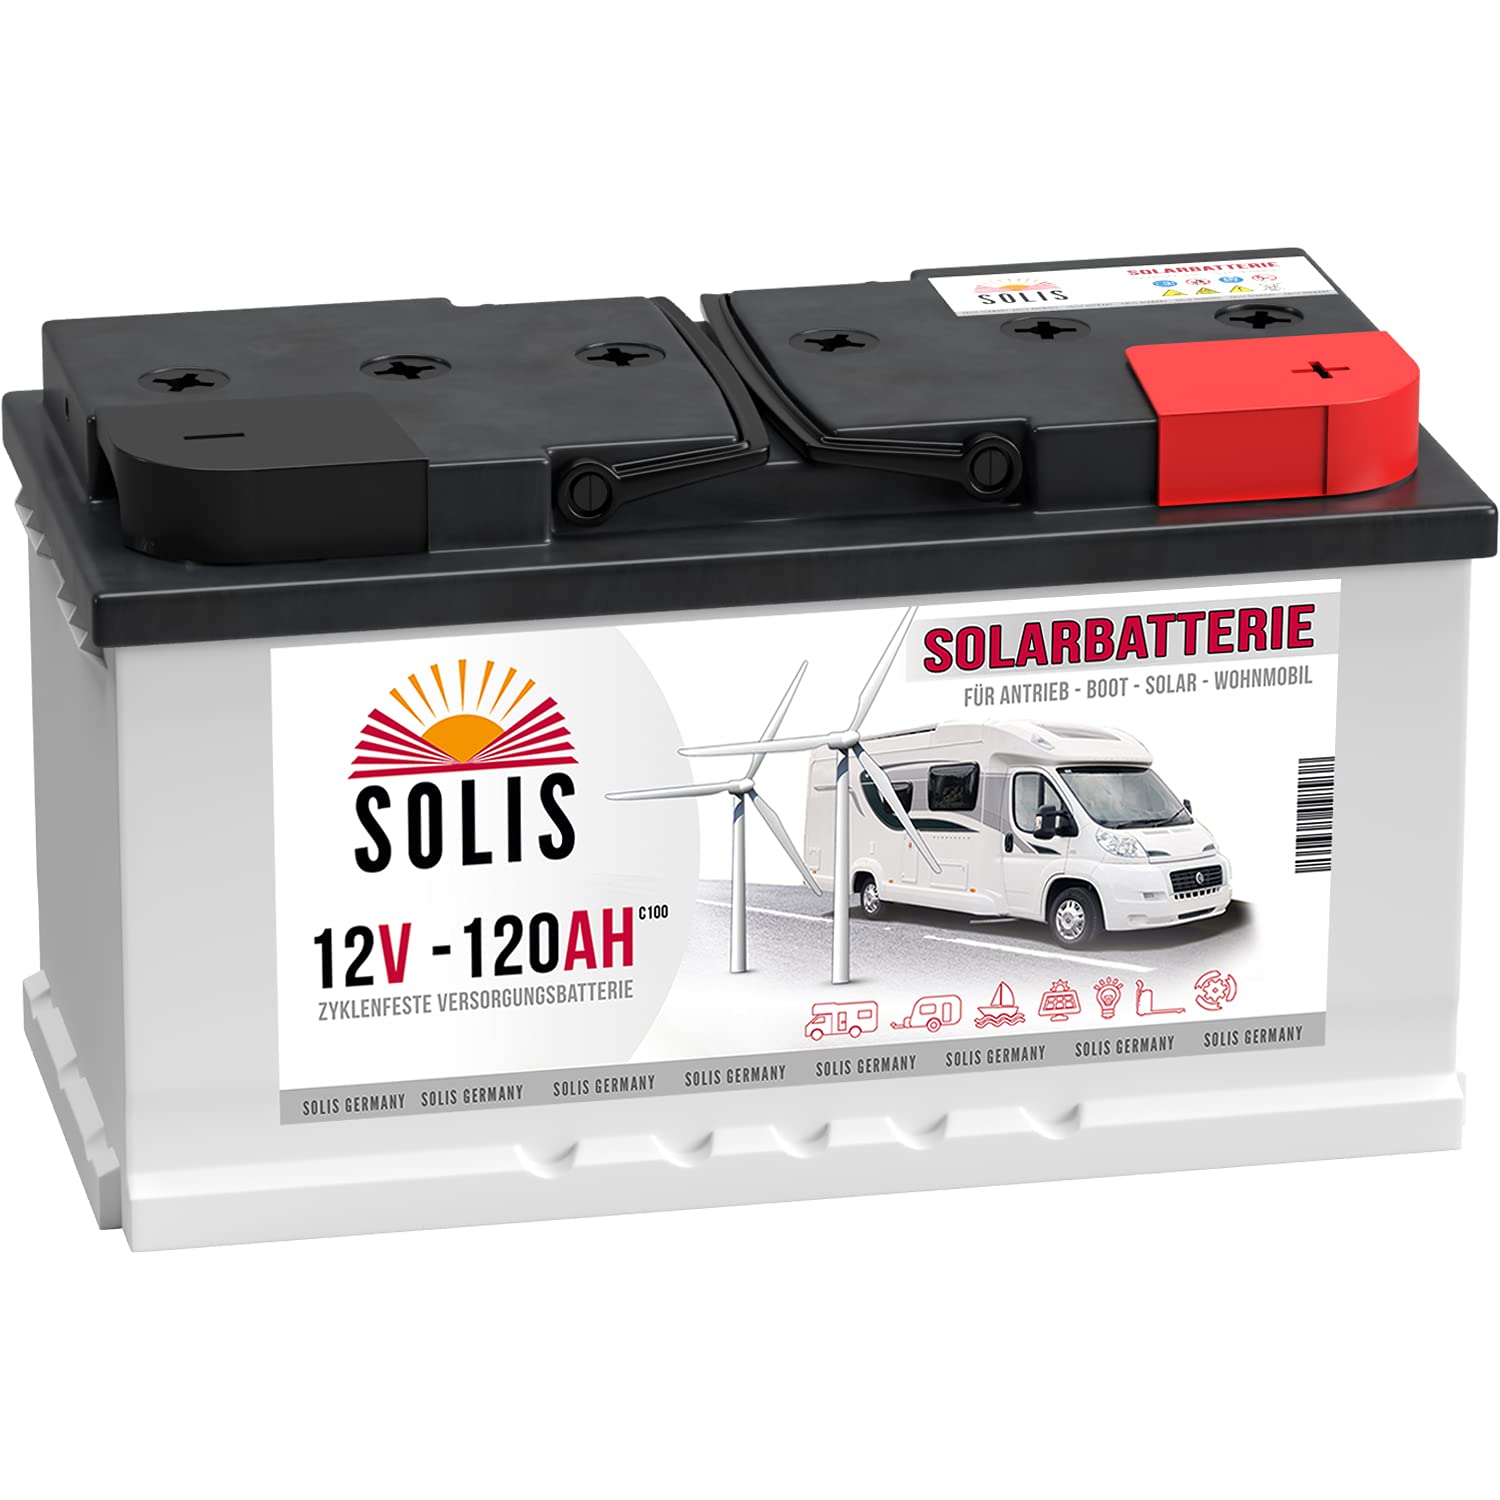 Solarbatterie Batterie 12V 120AH Wohnmobilbatterie Boot Marine Wohnmobil Versorgung Verbraucher statt 100Ah von SOLIS